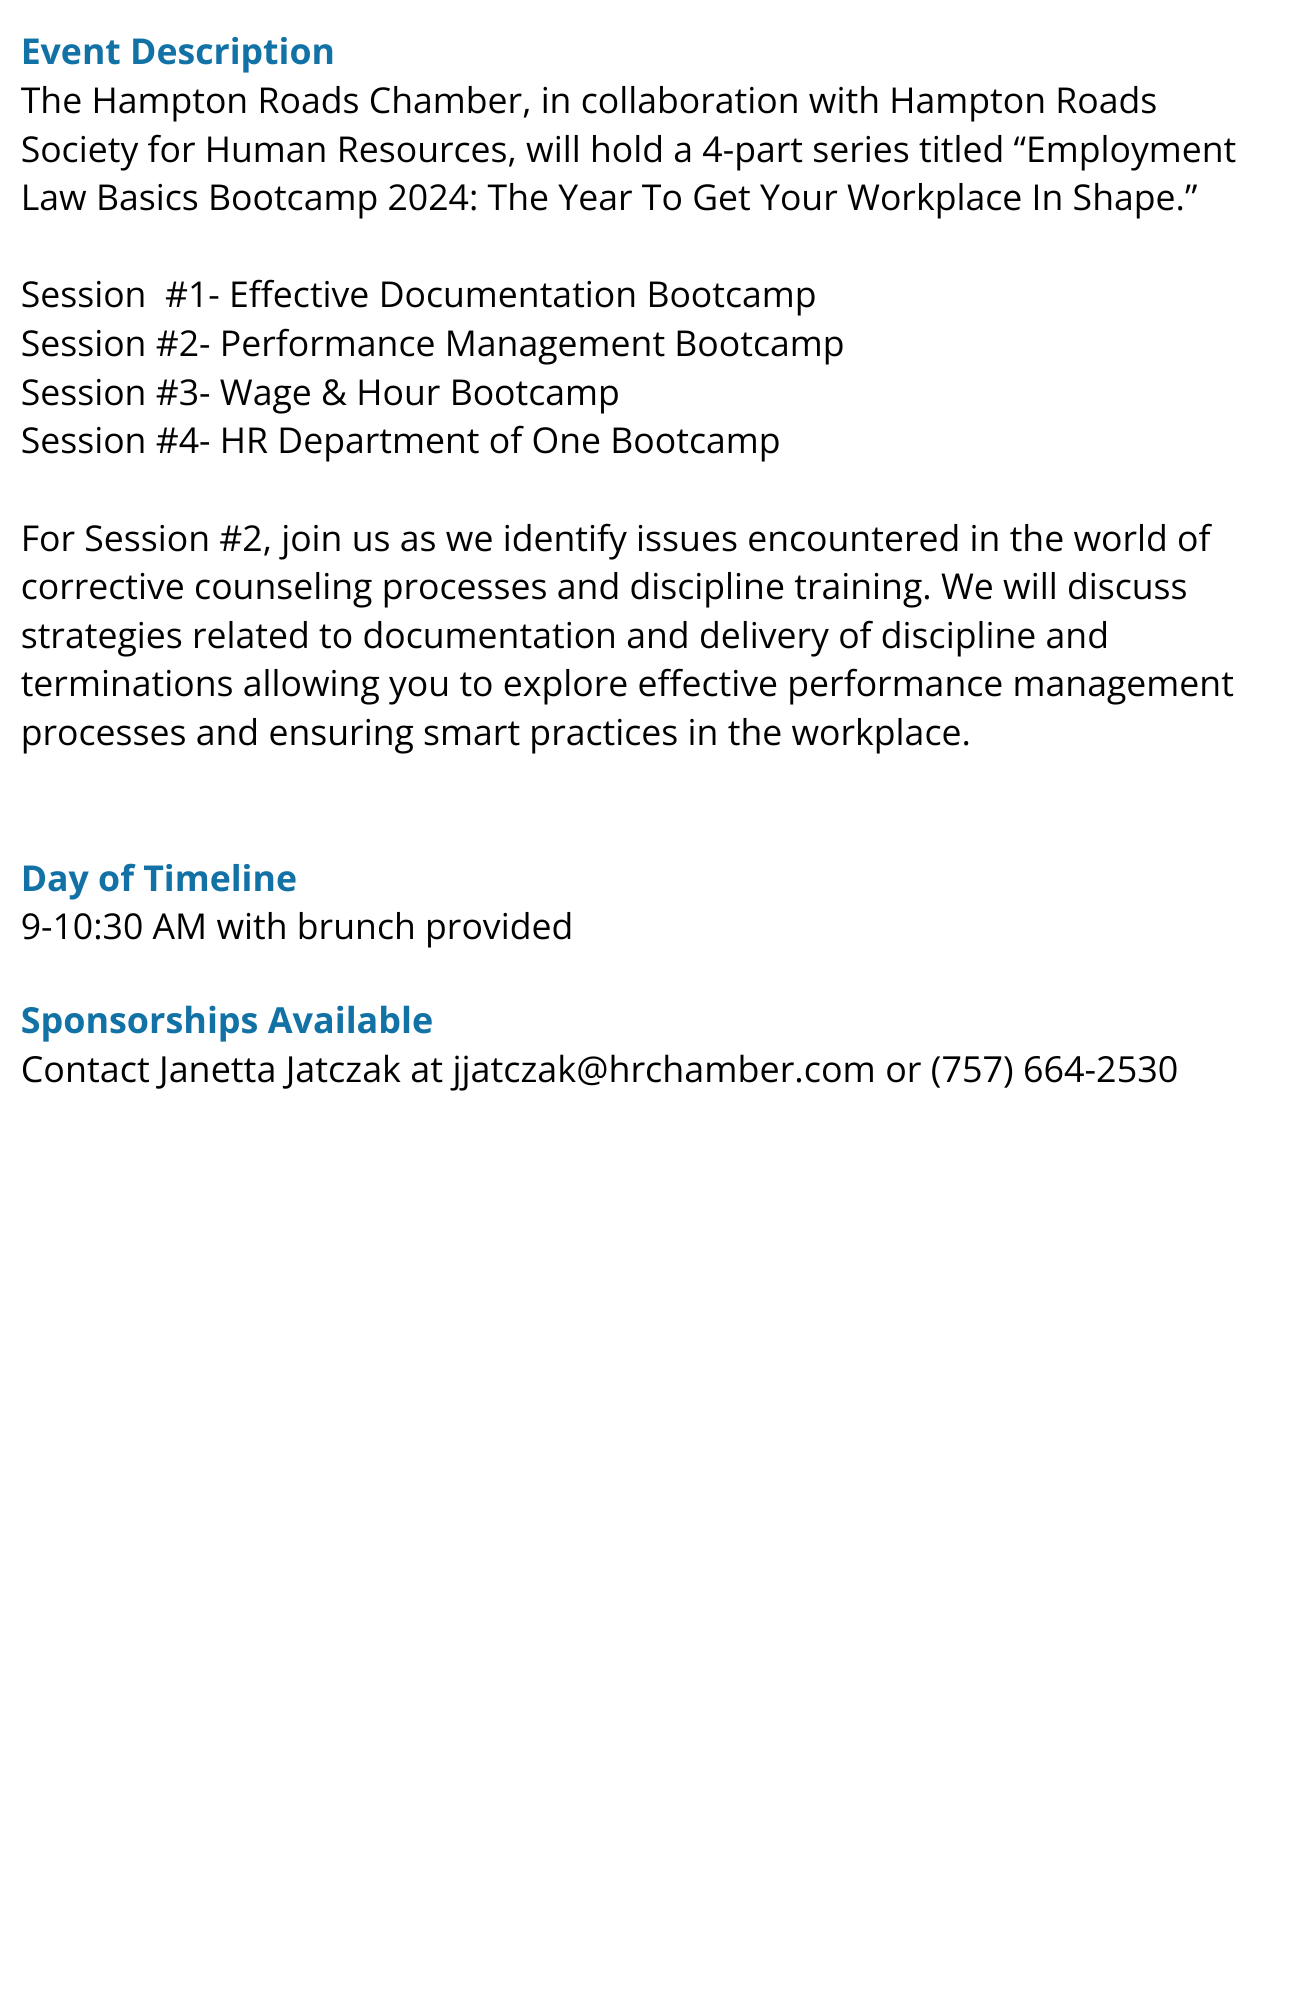 HRSHRM Series- Employment Law Basics Bootcamp: Session #2 Performance Management